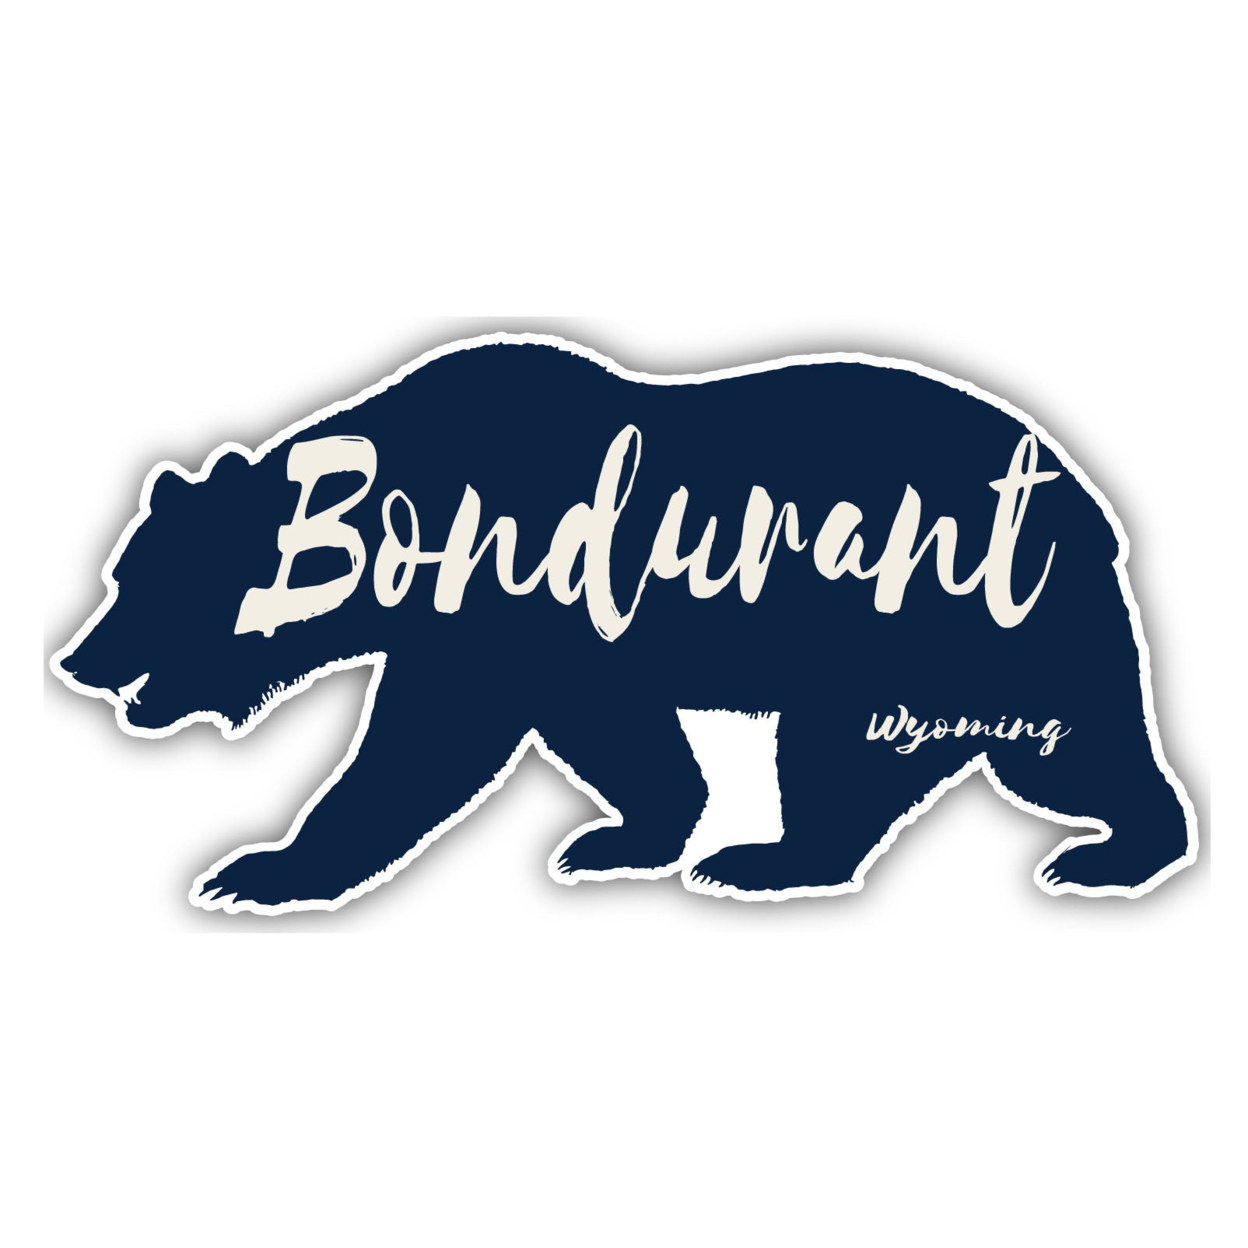 Bondurant Wyoming Souvenir Decorative Stickers (Choose Theme And Size) - 4-Pack, 4-Inch, Bear